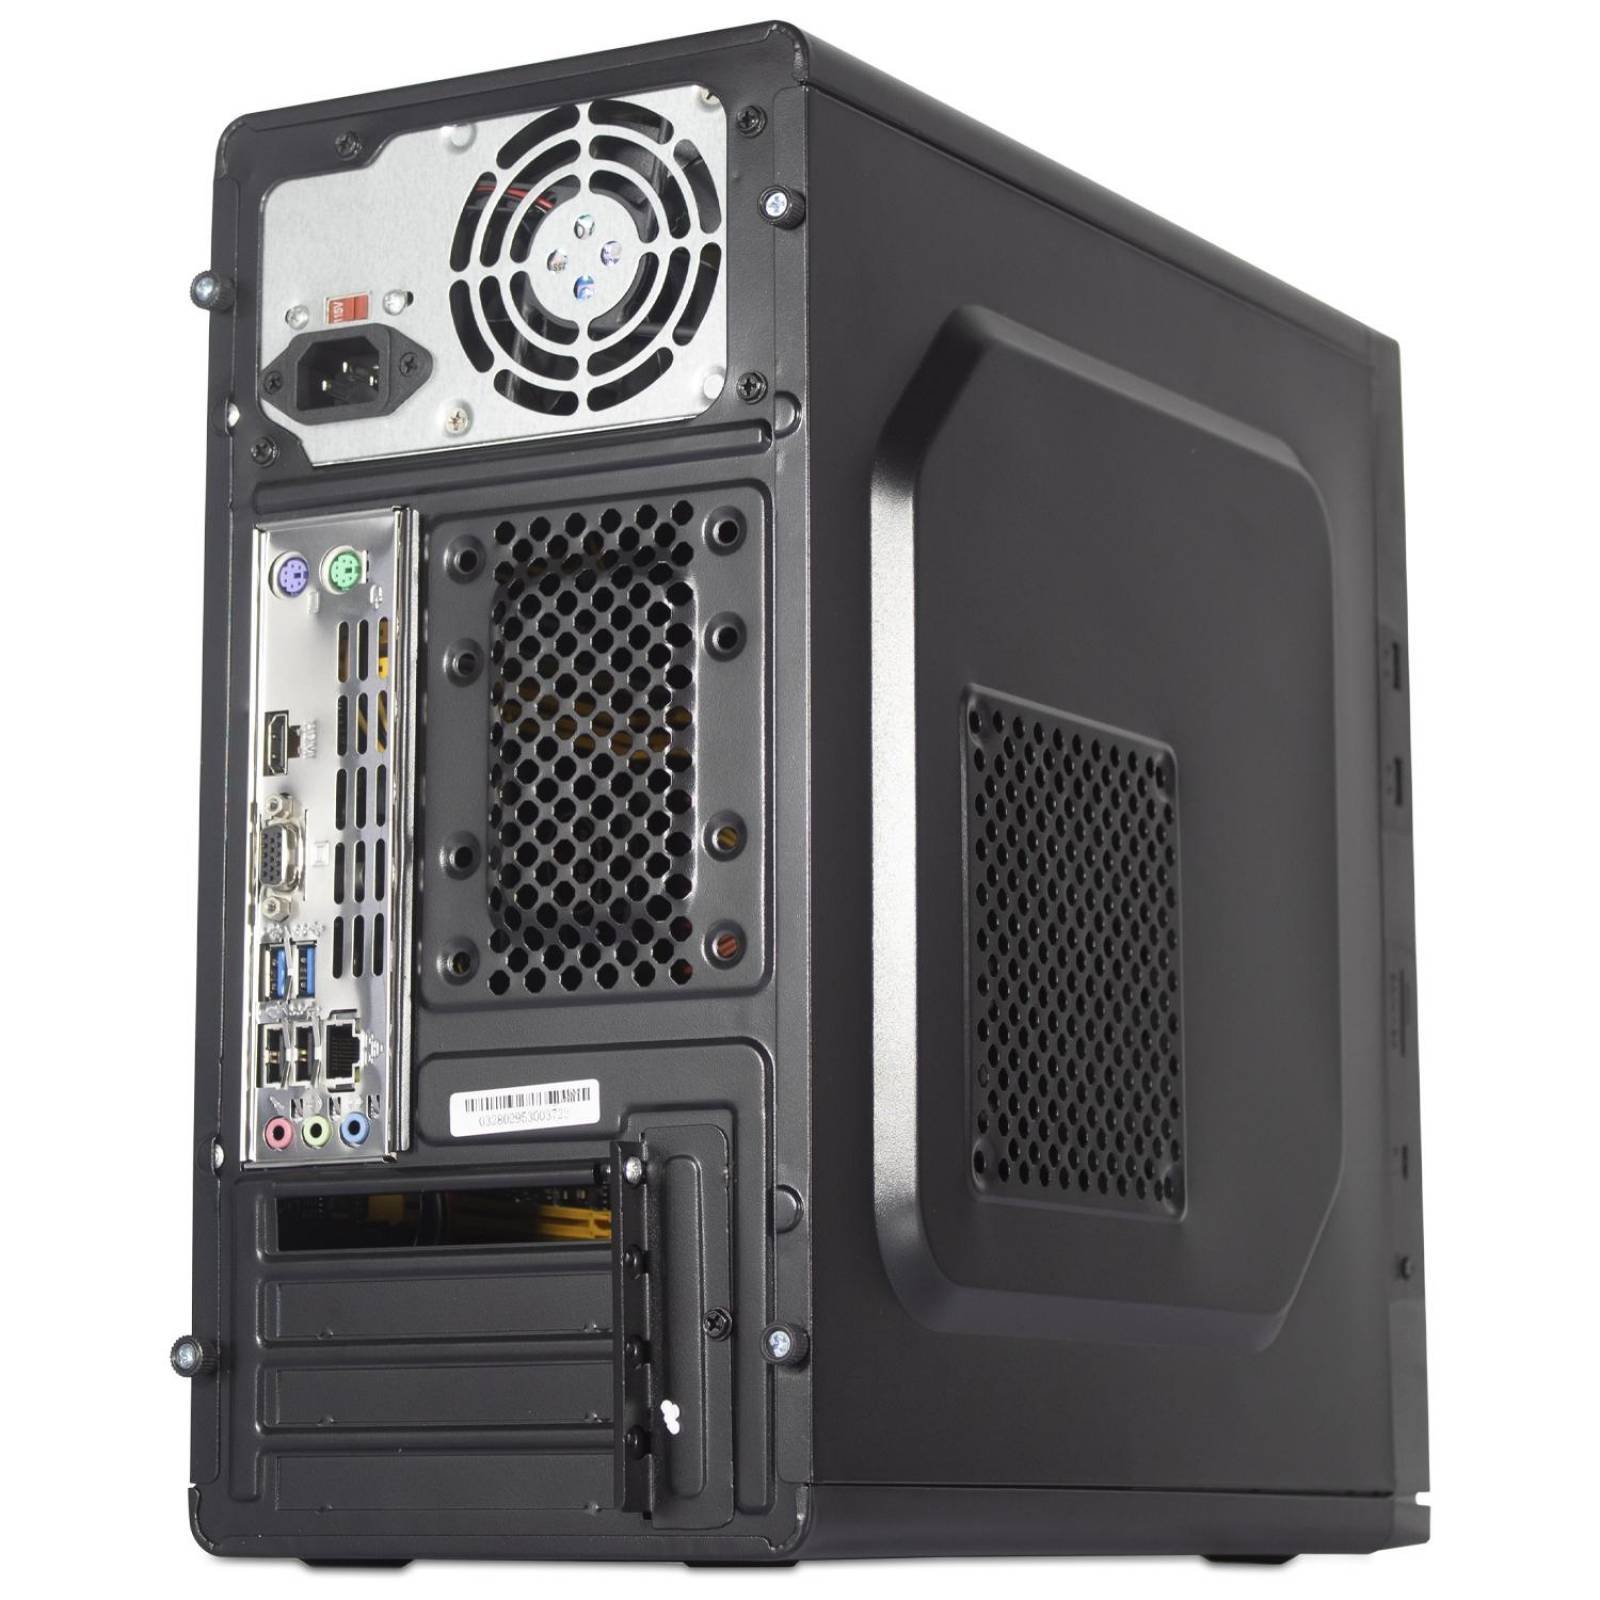 Xtreme PC Gamer AMD Radeon R5 A10 9630P 8GB 1TB Monitor 20.7 WIFI 